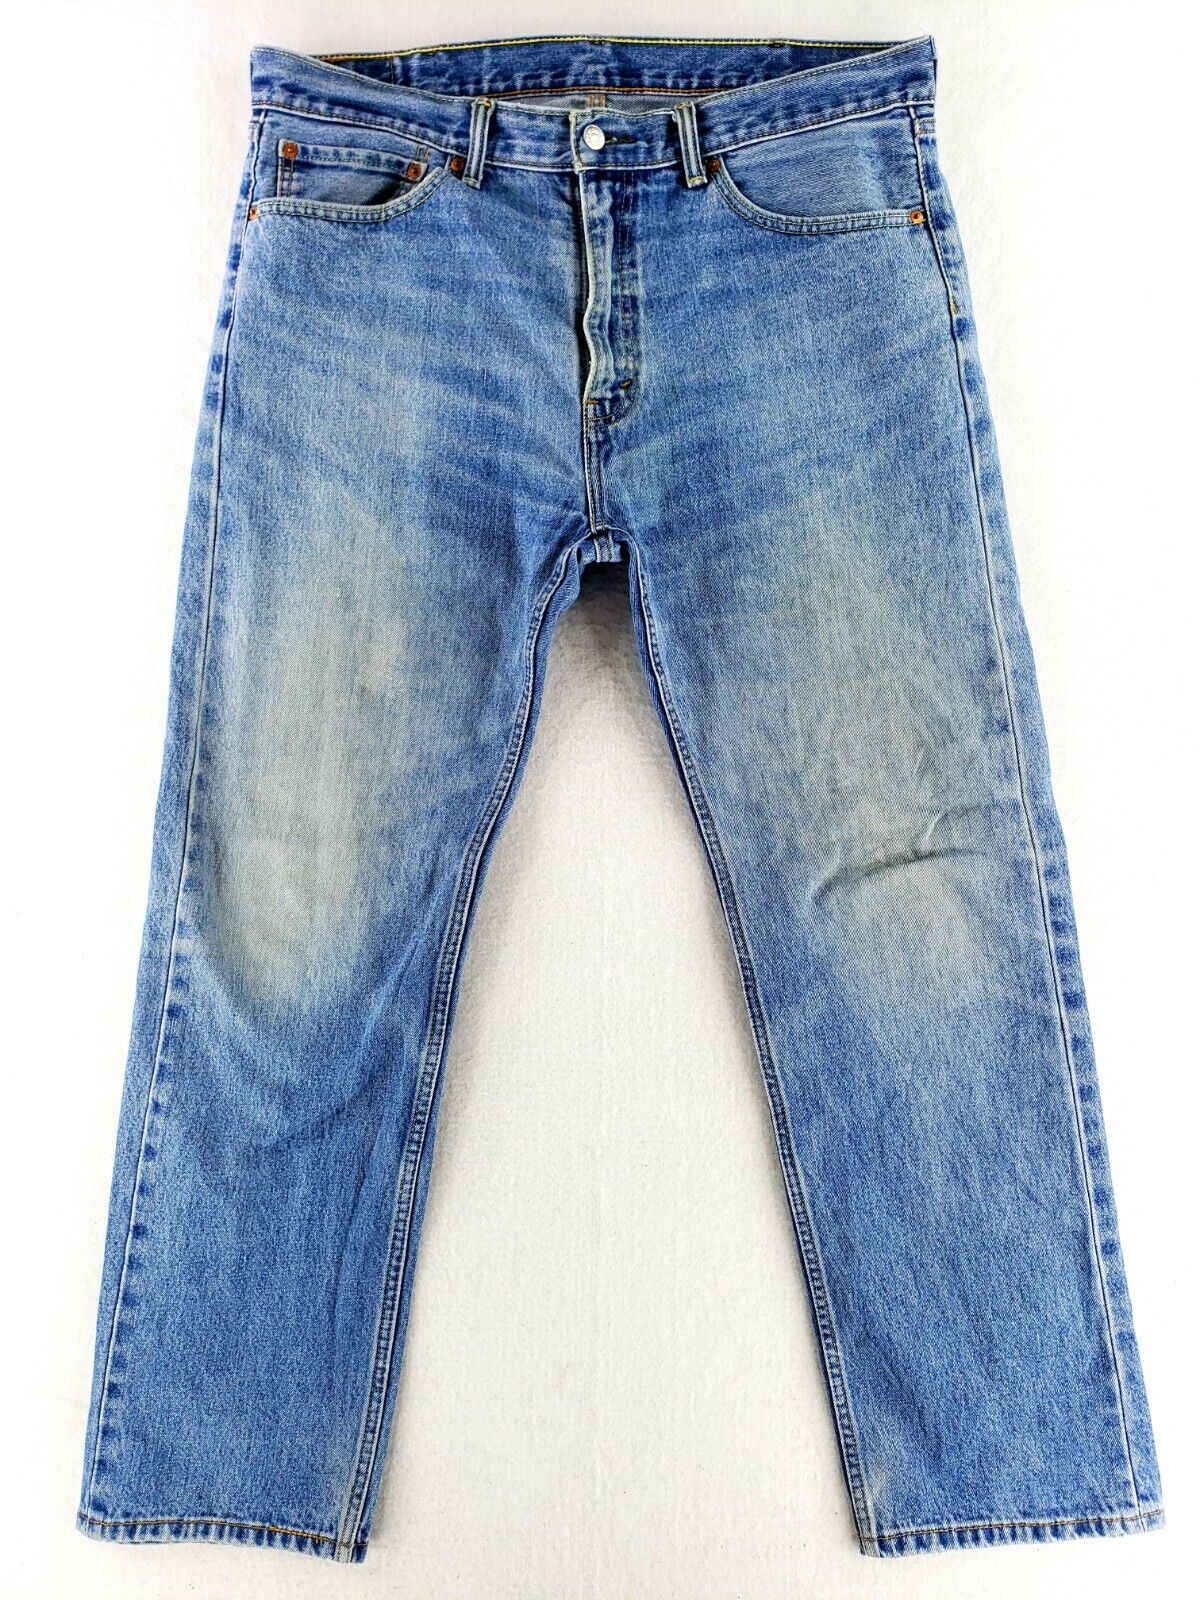 Levi's 505 Regular Fit 38x32 Classic High quality new Brand Cheap Sale Venue Jeans Denim Blue